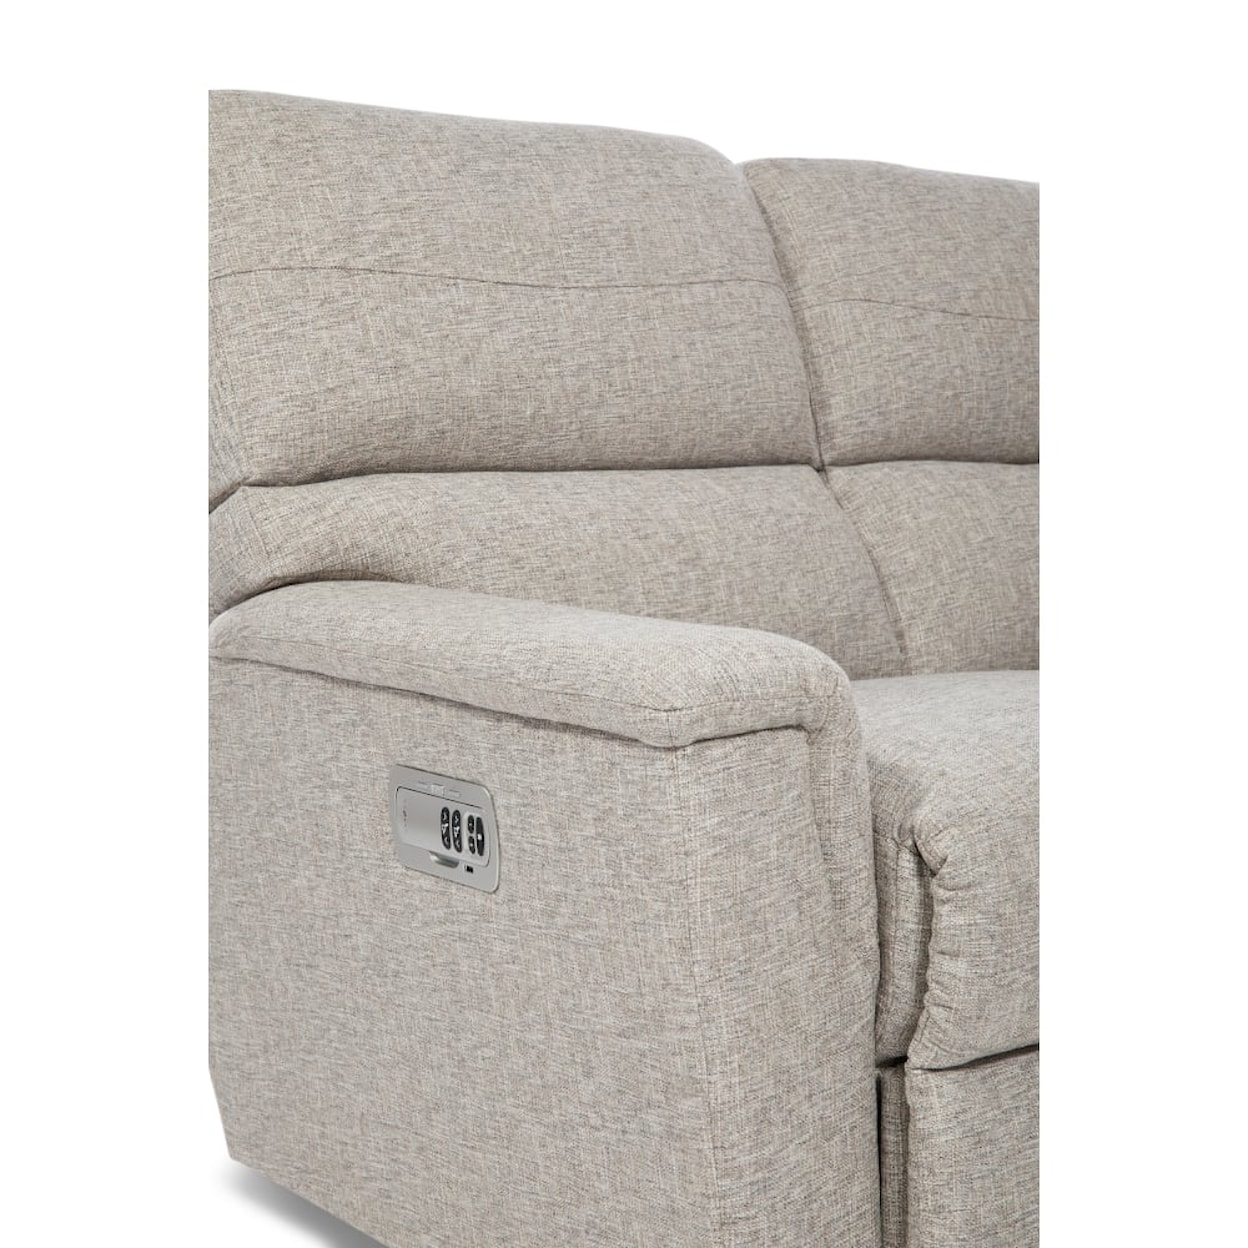 La-Z-Boy Ava Power Reclining Sofa w/ Headrest & Lumbar